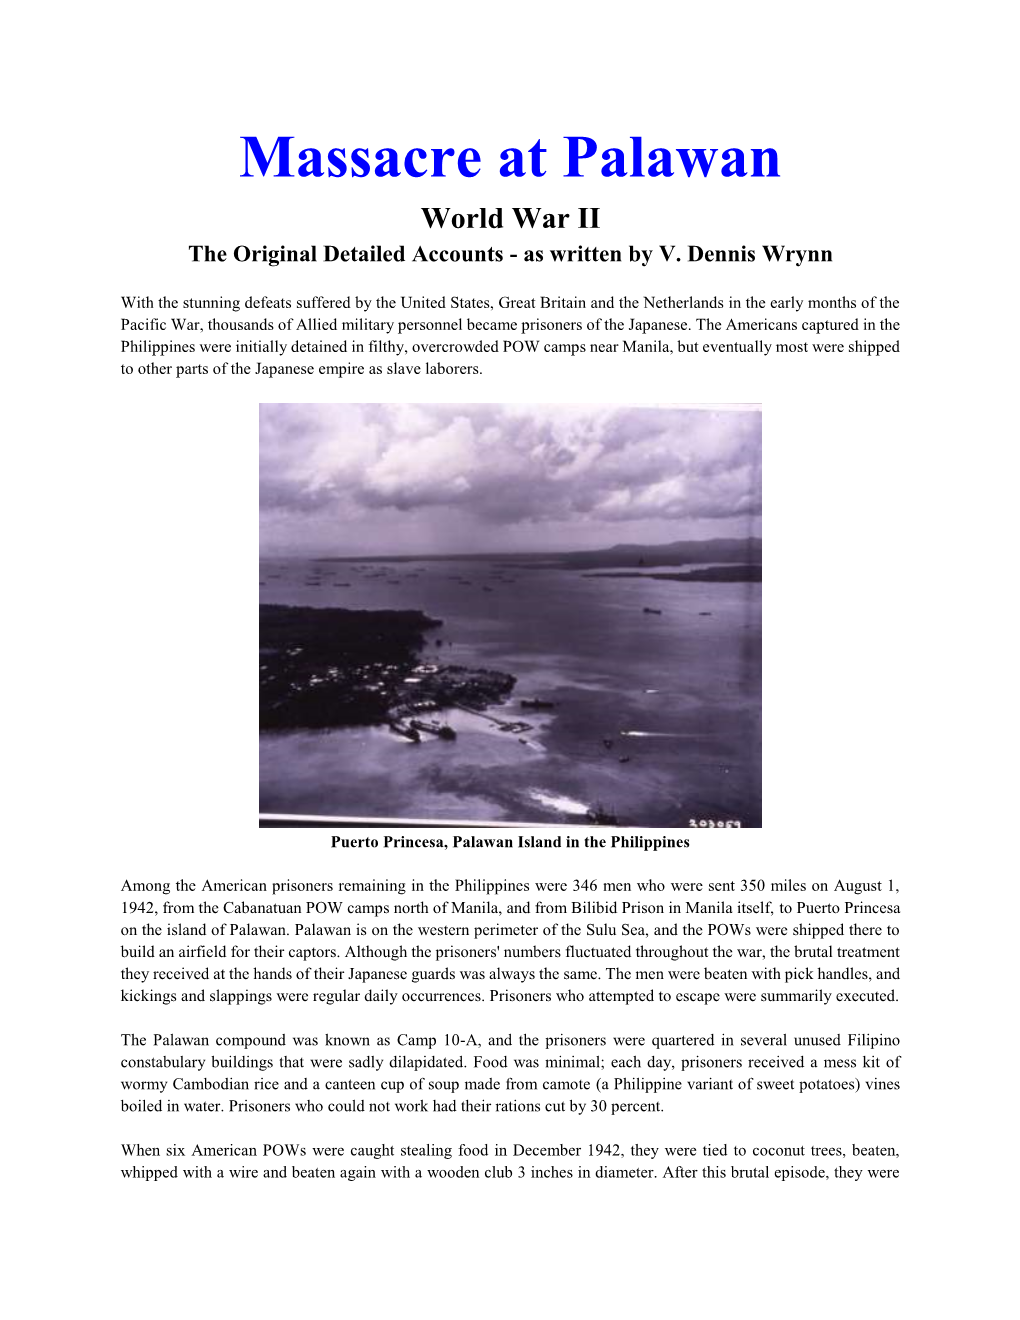 Massacre at Palawan World War II the Original Detailed Accounts - As Written by V